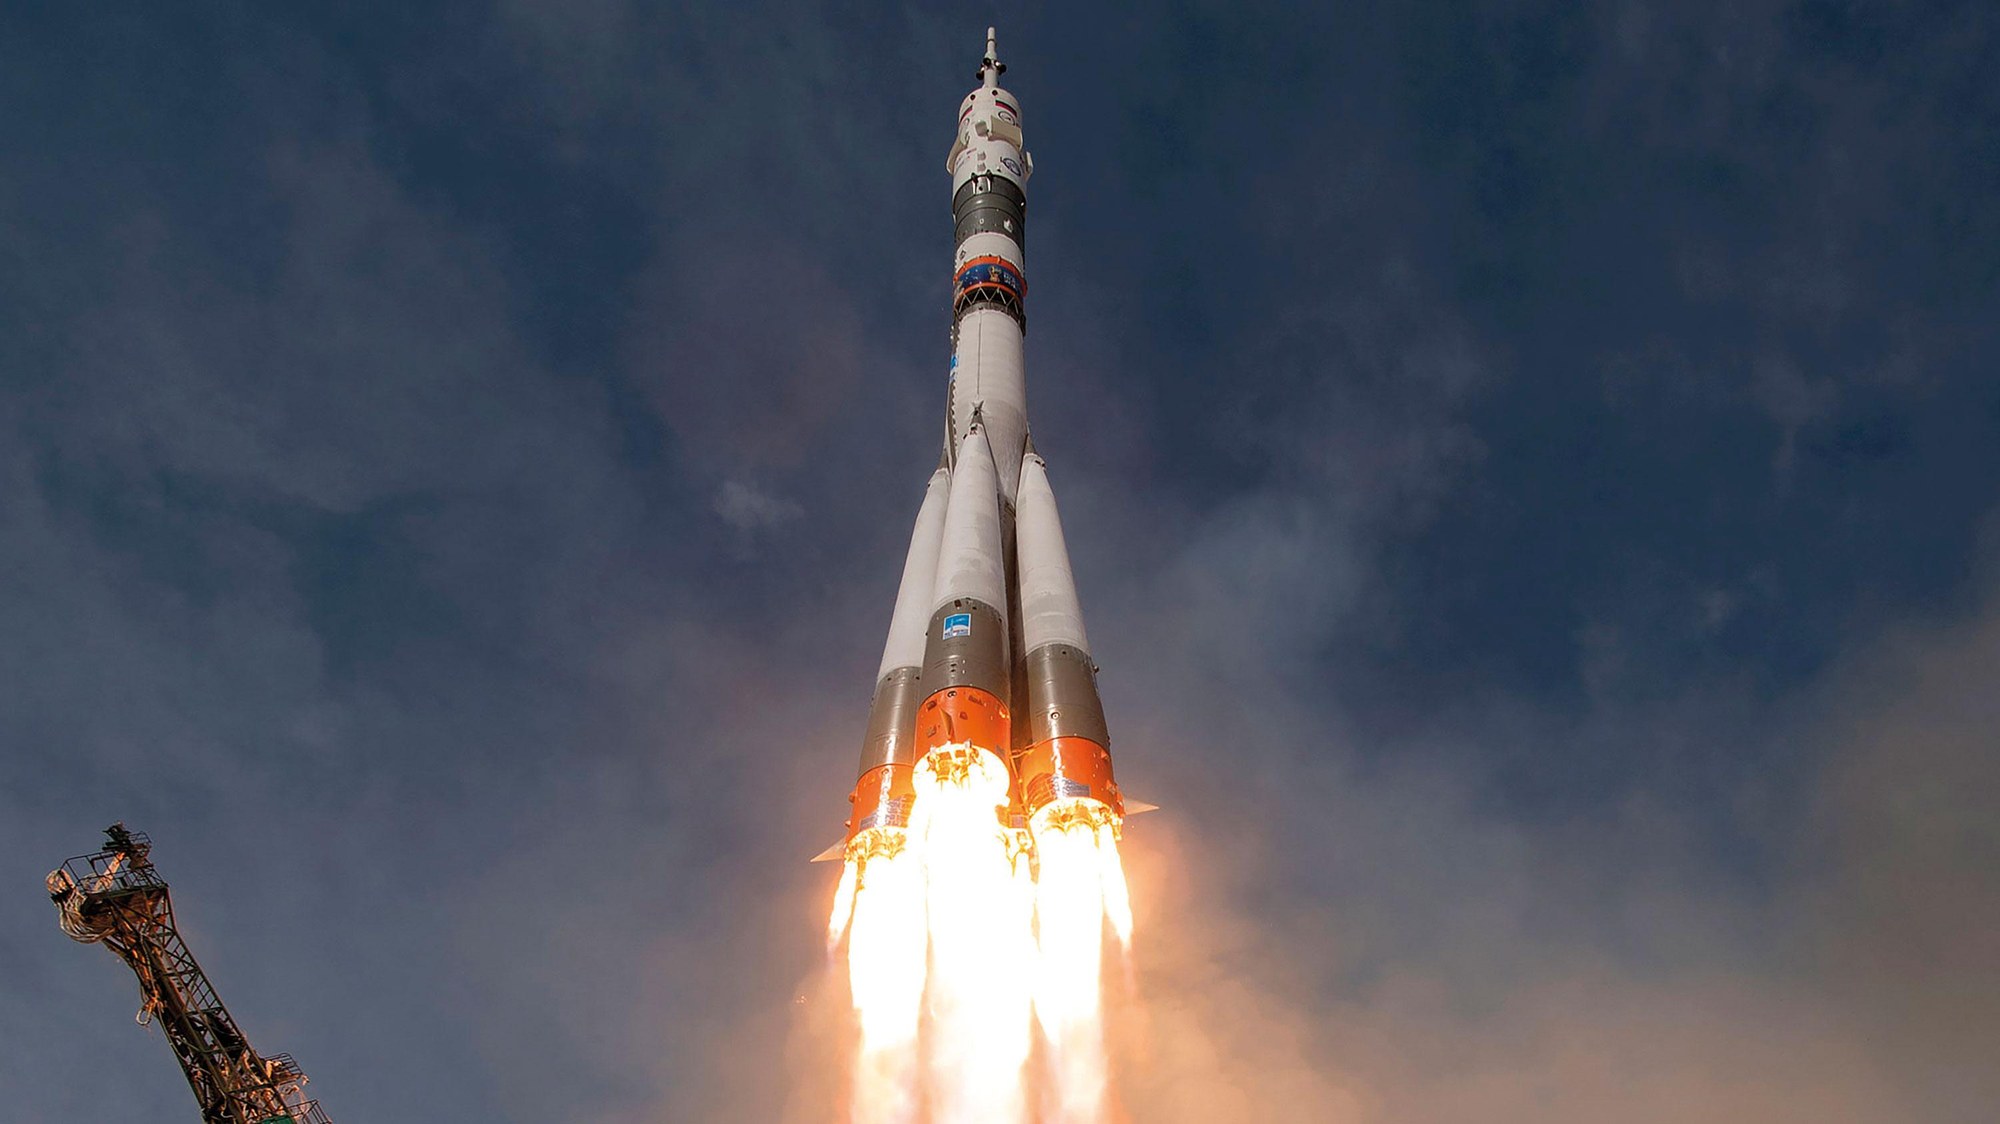 Launch of the Soyuz MS-09